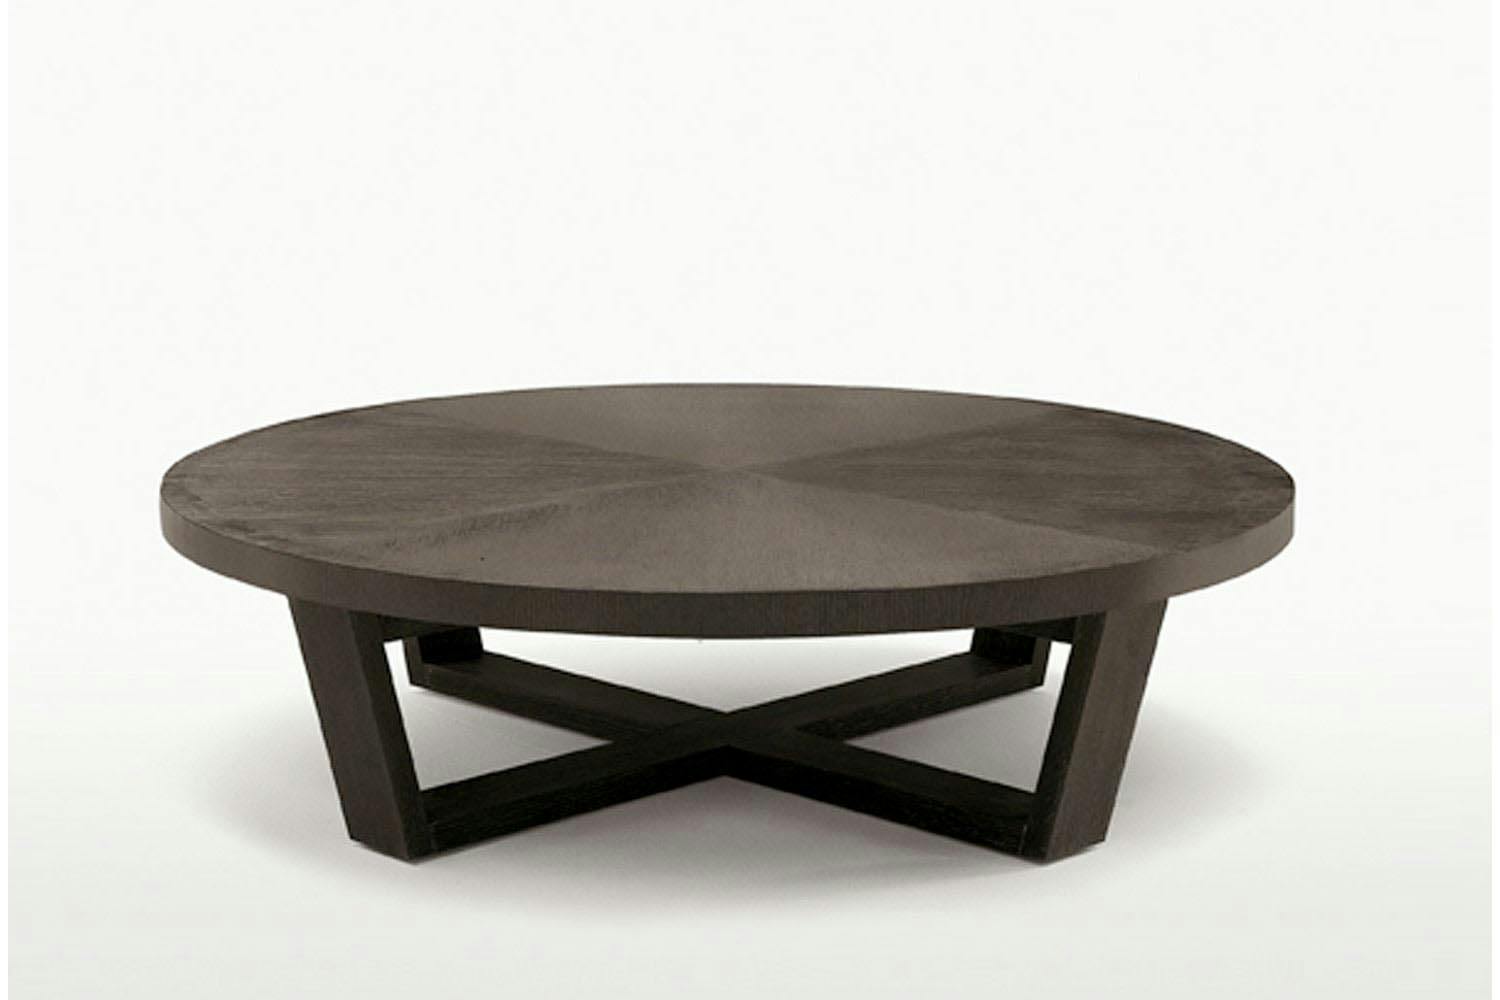 Xilos Small Table by Antonio Citterio for Maxalto | Space ... - 1500 x 1000 jpeg 43kB